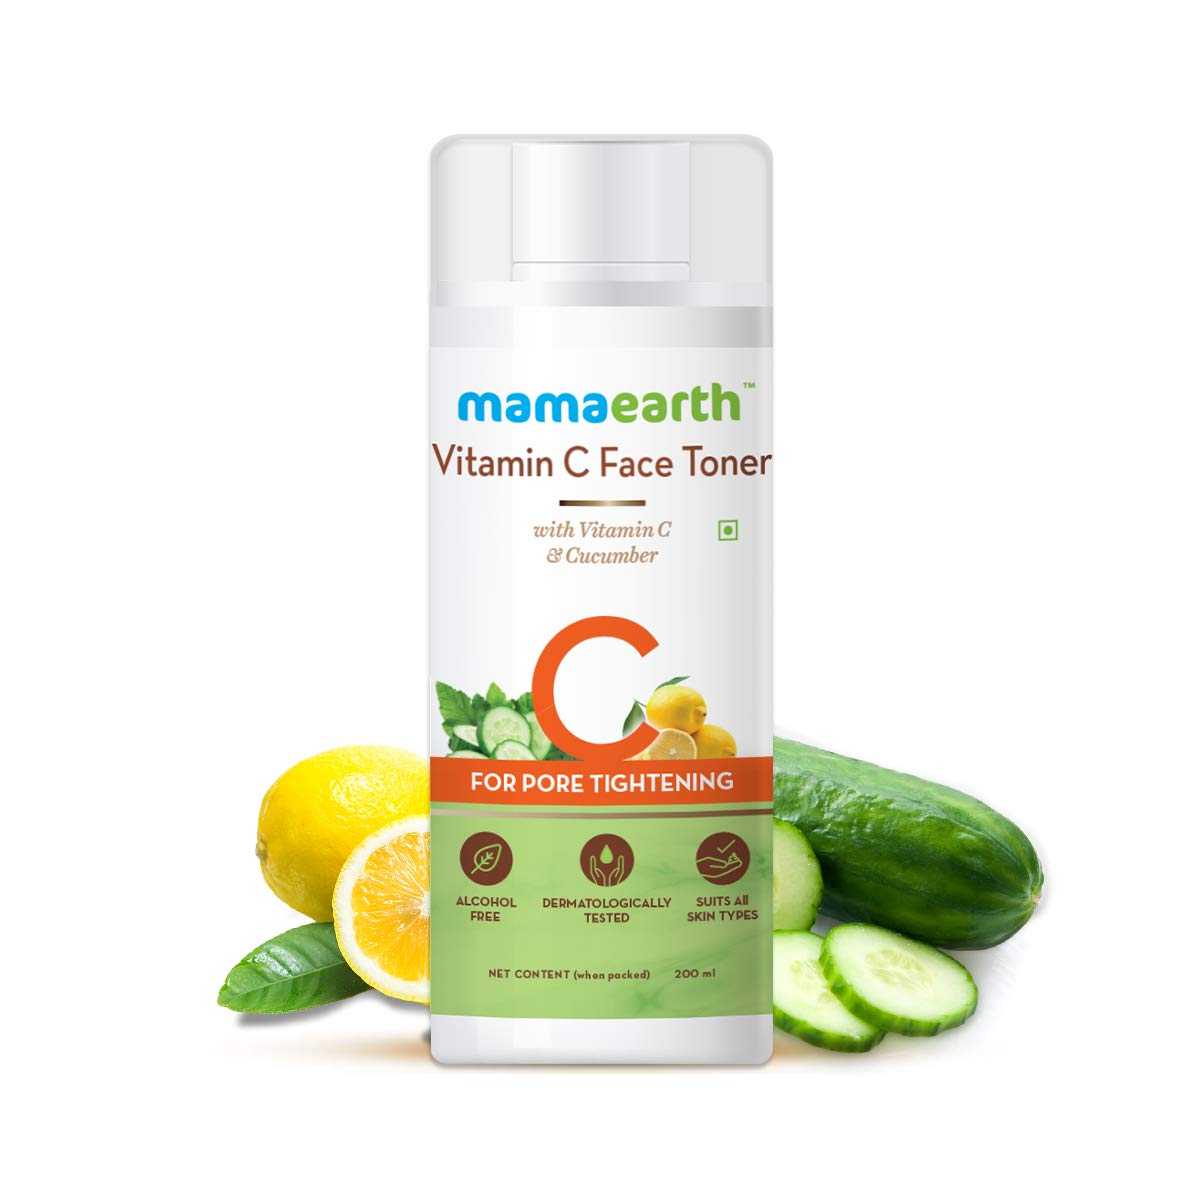 Mamaearth Vitamin C Face Toner - Toner for oily skin